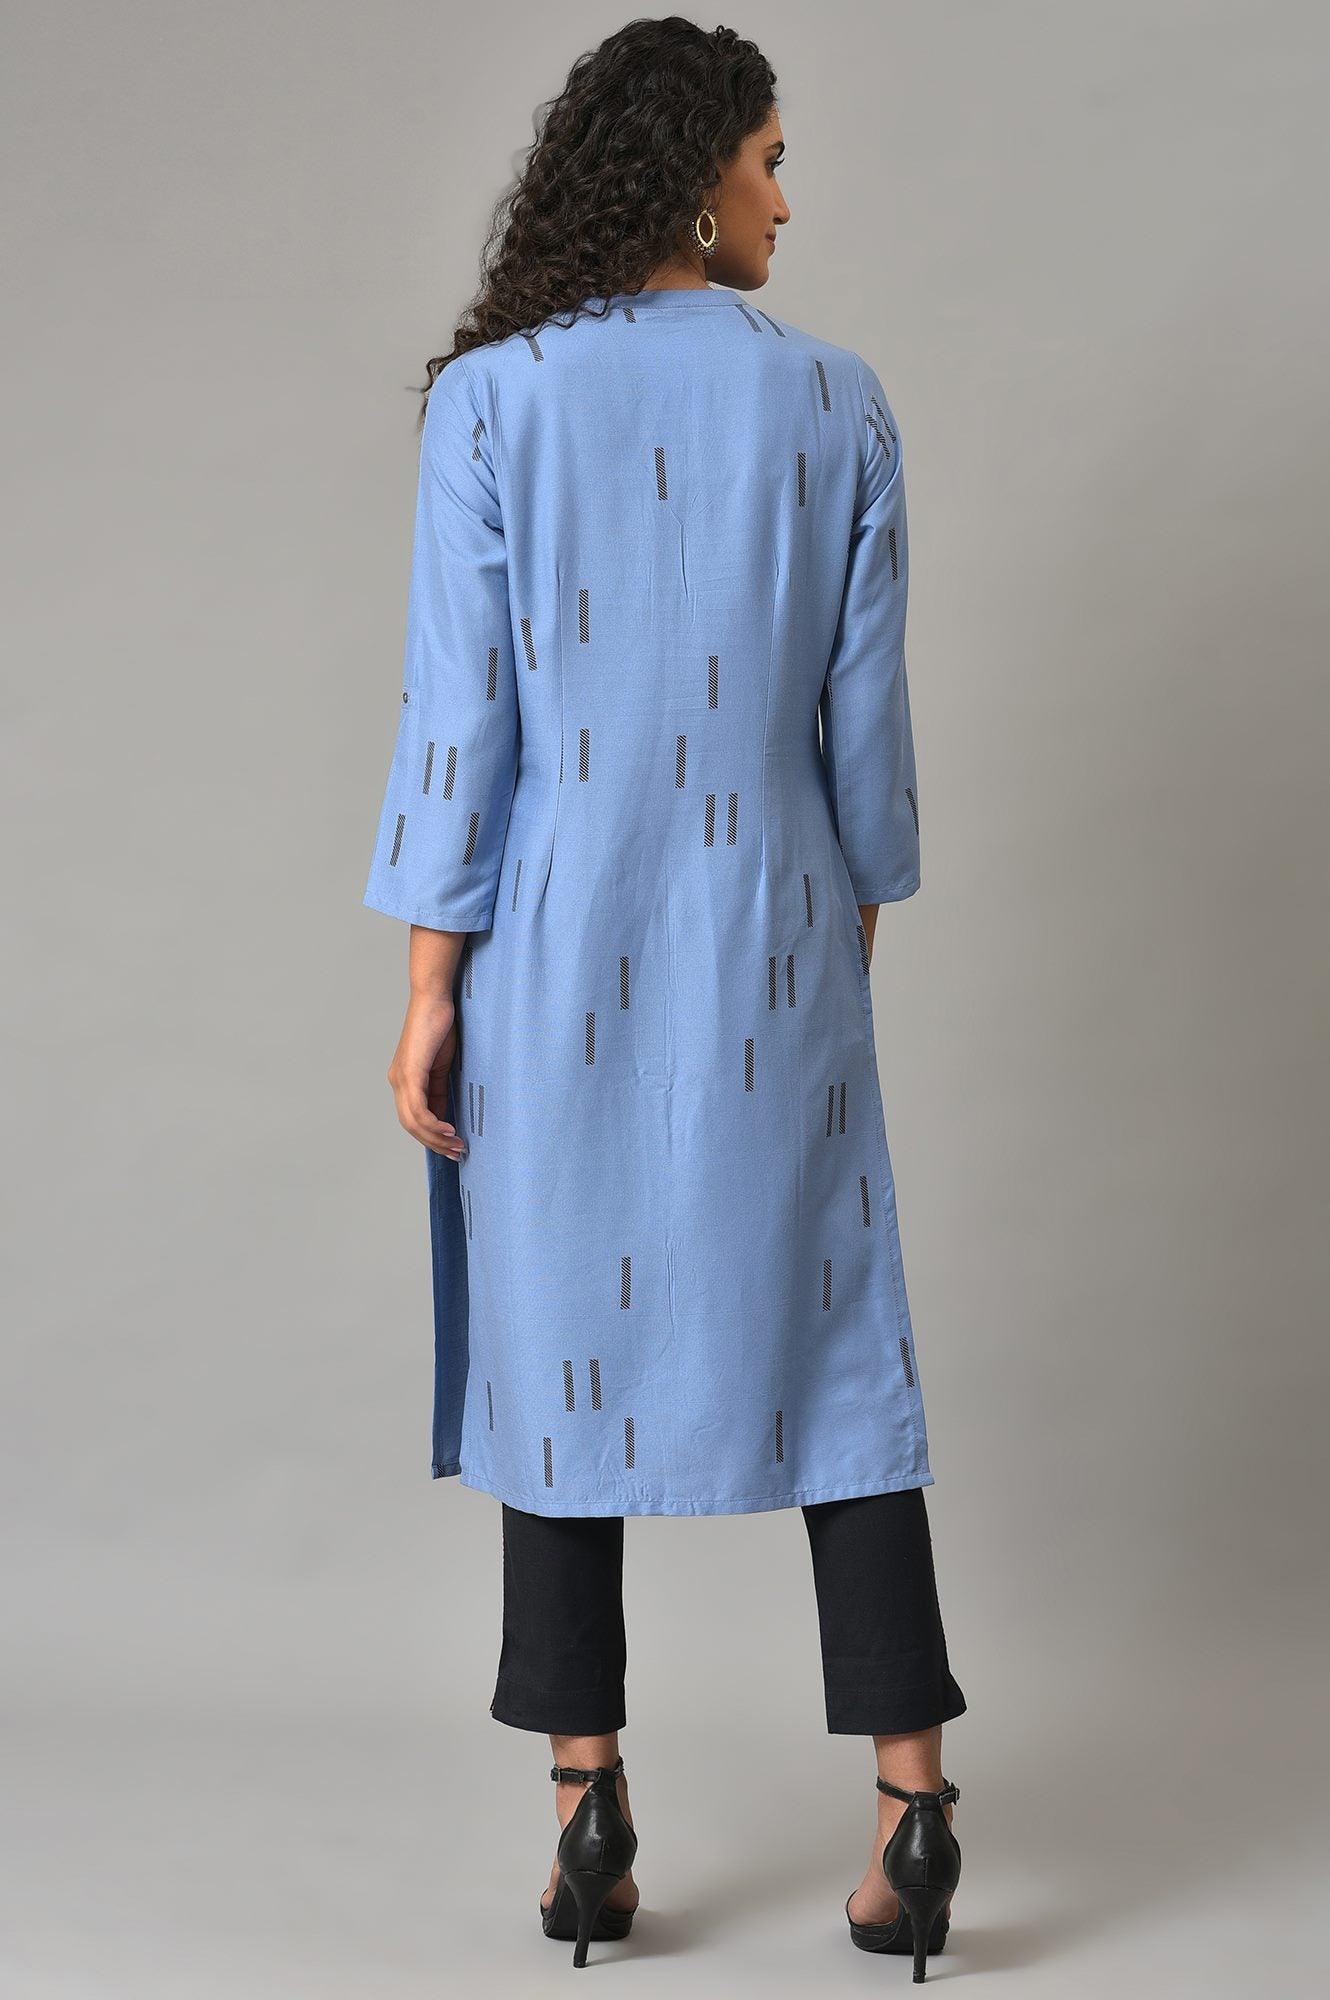 Blue Geometric Print Shirt kurta - wforwoman